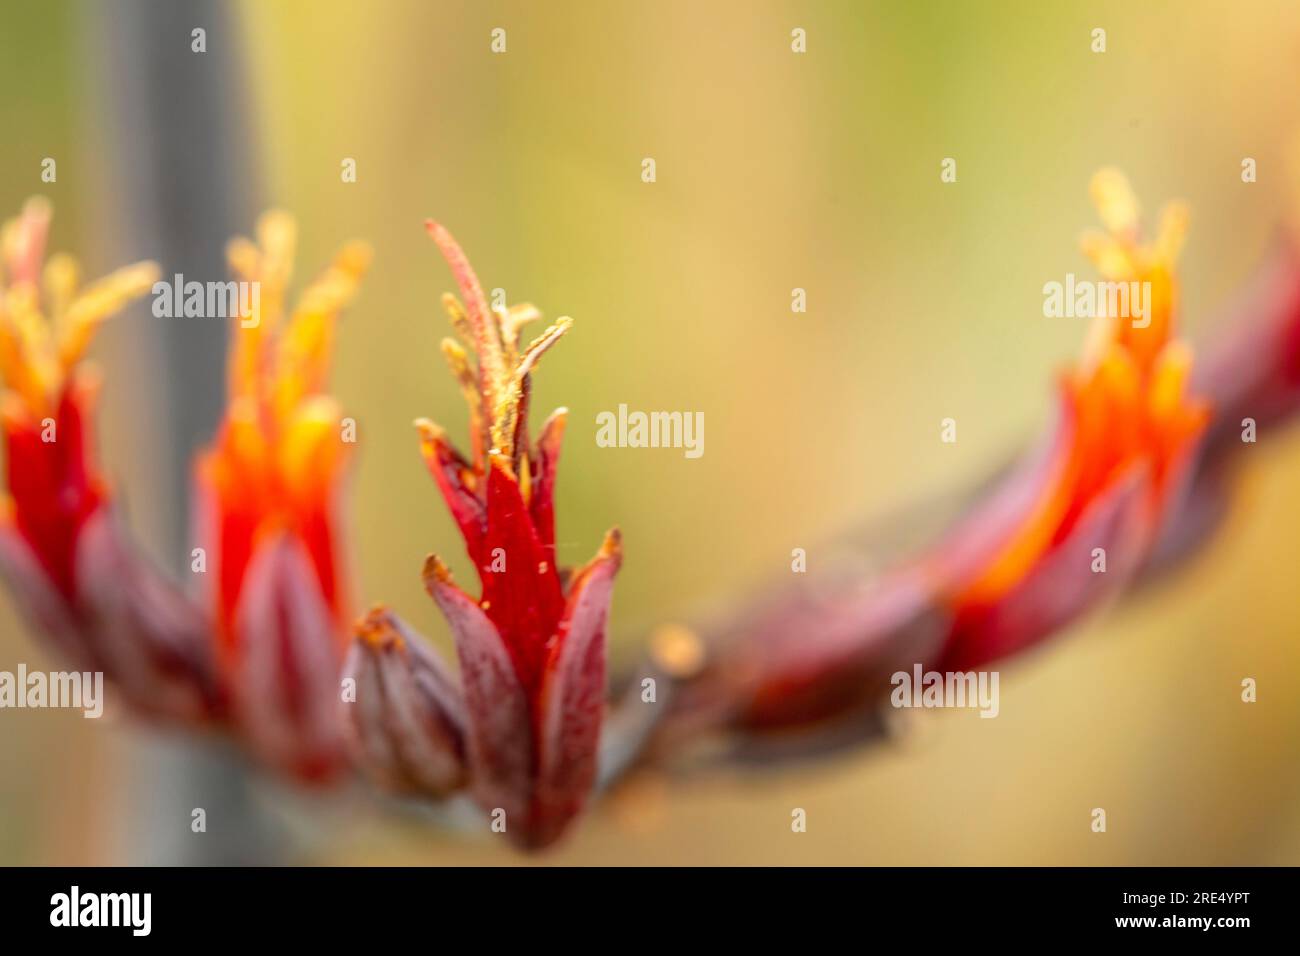 Natural close up flowering plant portrait of Phormium Tenax 'Purpureum Group’, with soft background Stock Photo